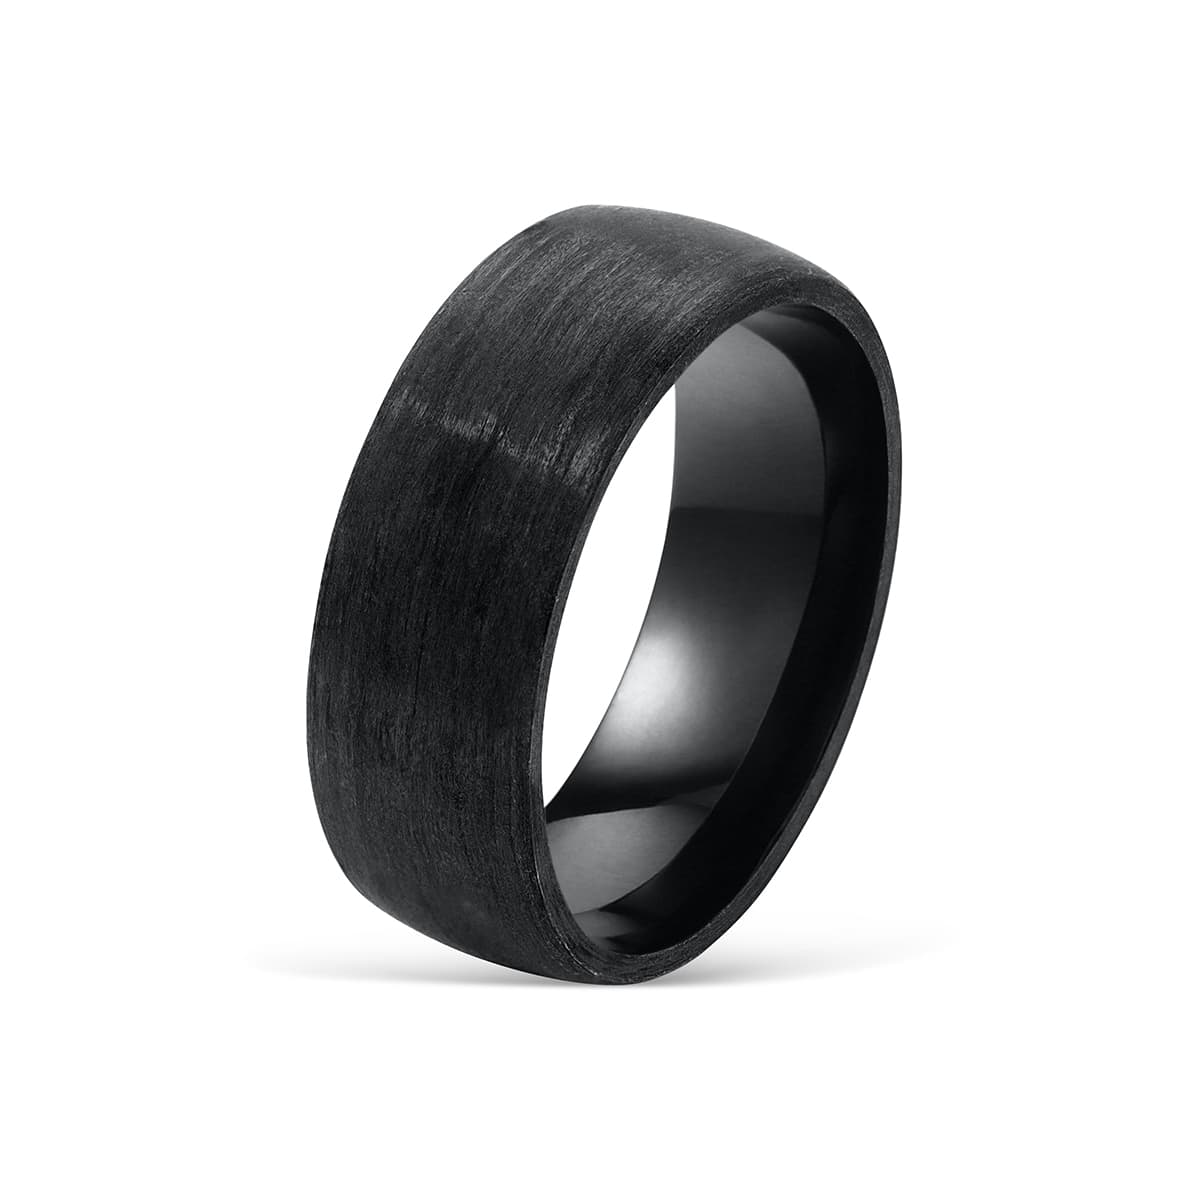 The Inferno Black & Red Tungsten Wedding Ring – Modern Gents